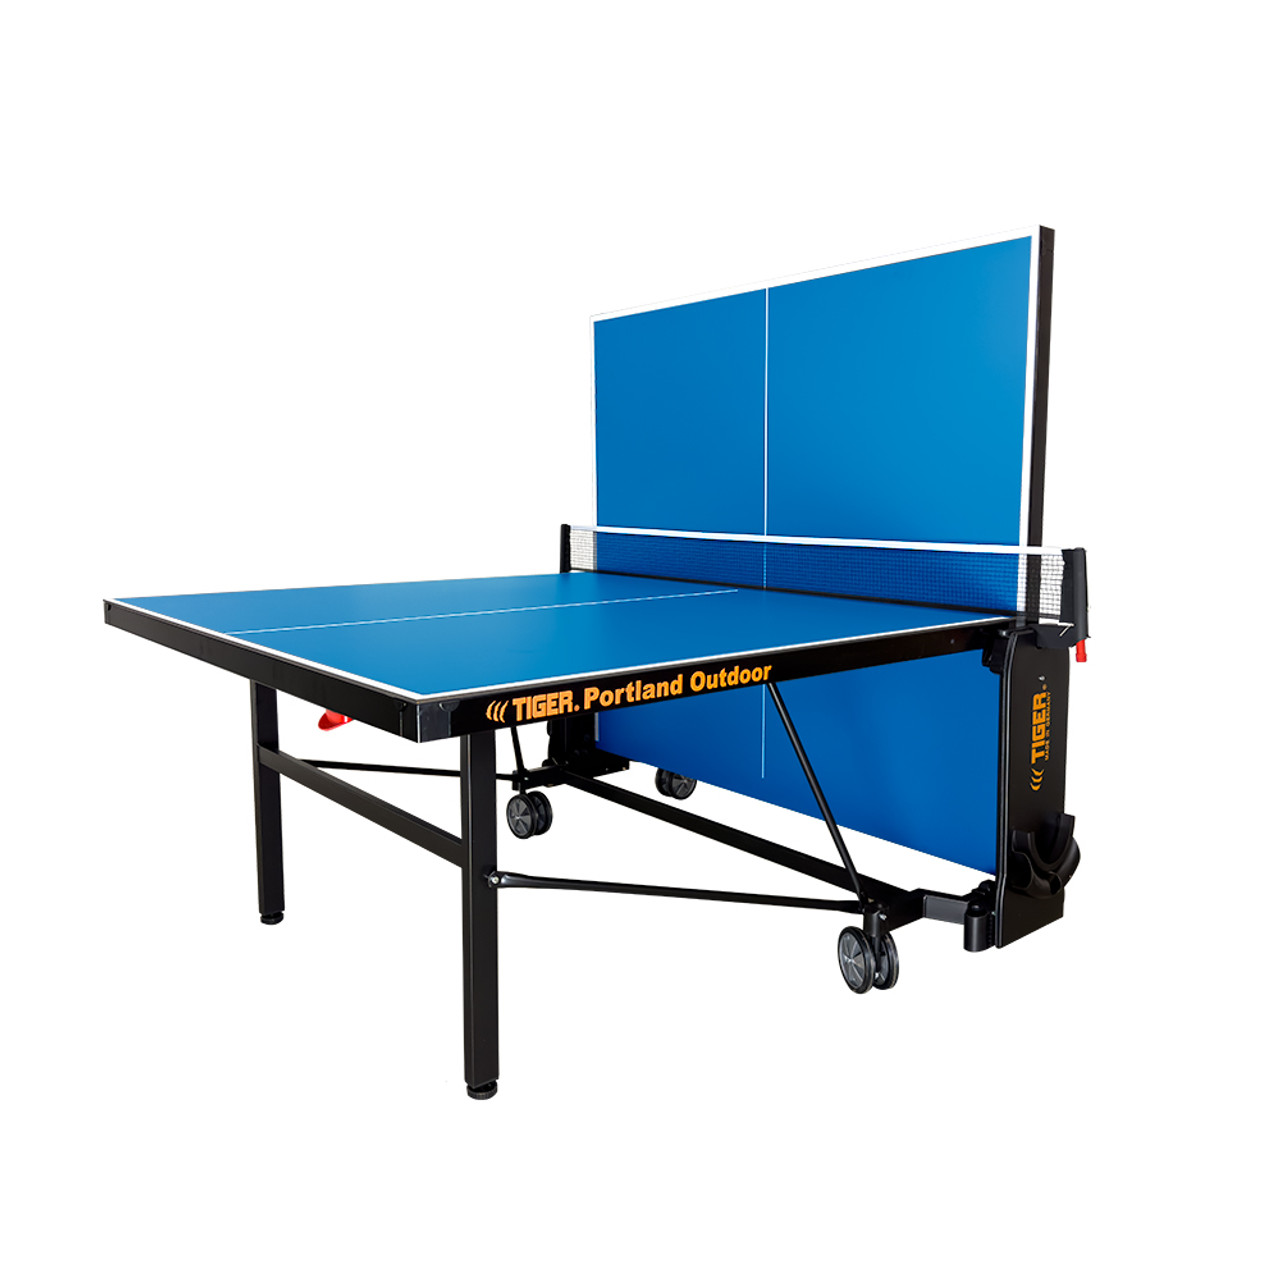 Portland Outdoor Ping Pong Table - Tiger PingPong